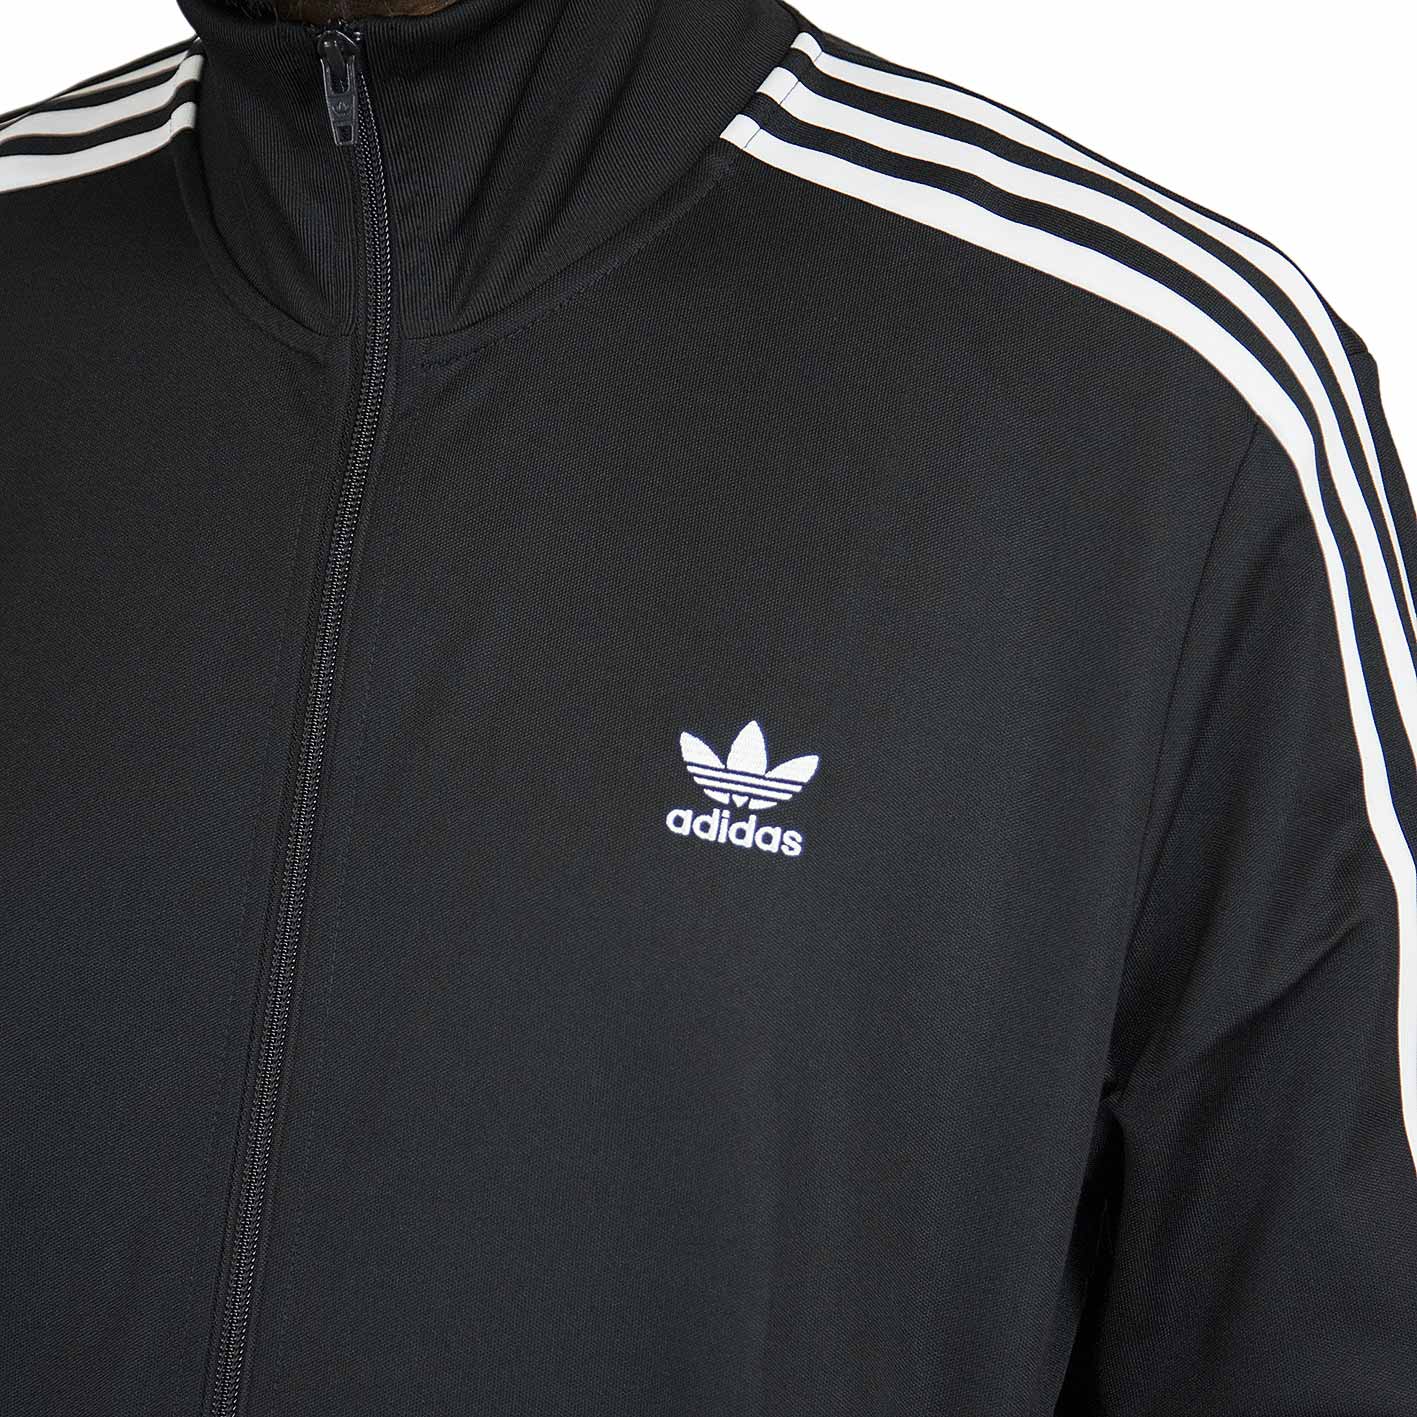 ☆ Adidas Originals Trainingsjacke Beckenbauer TT schwarz - hier bestellen!